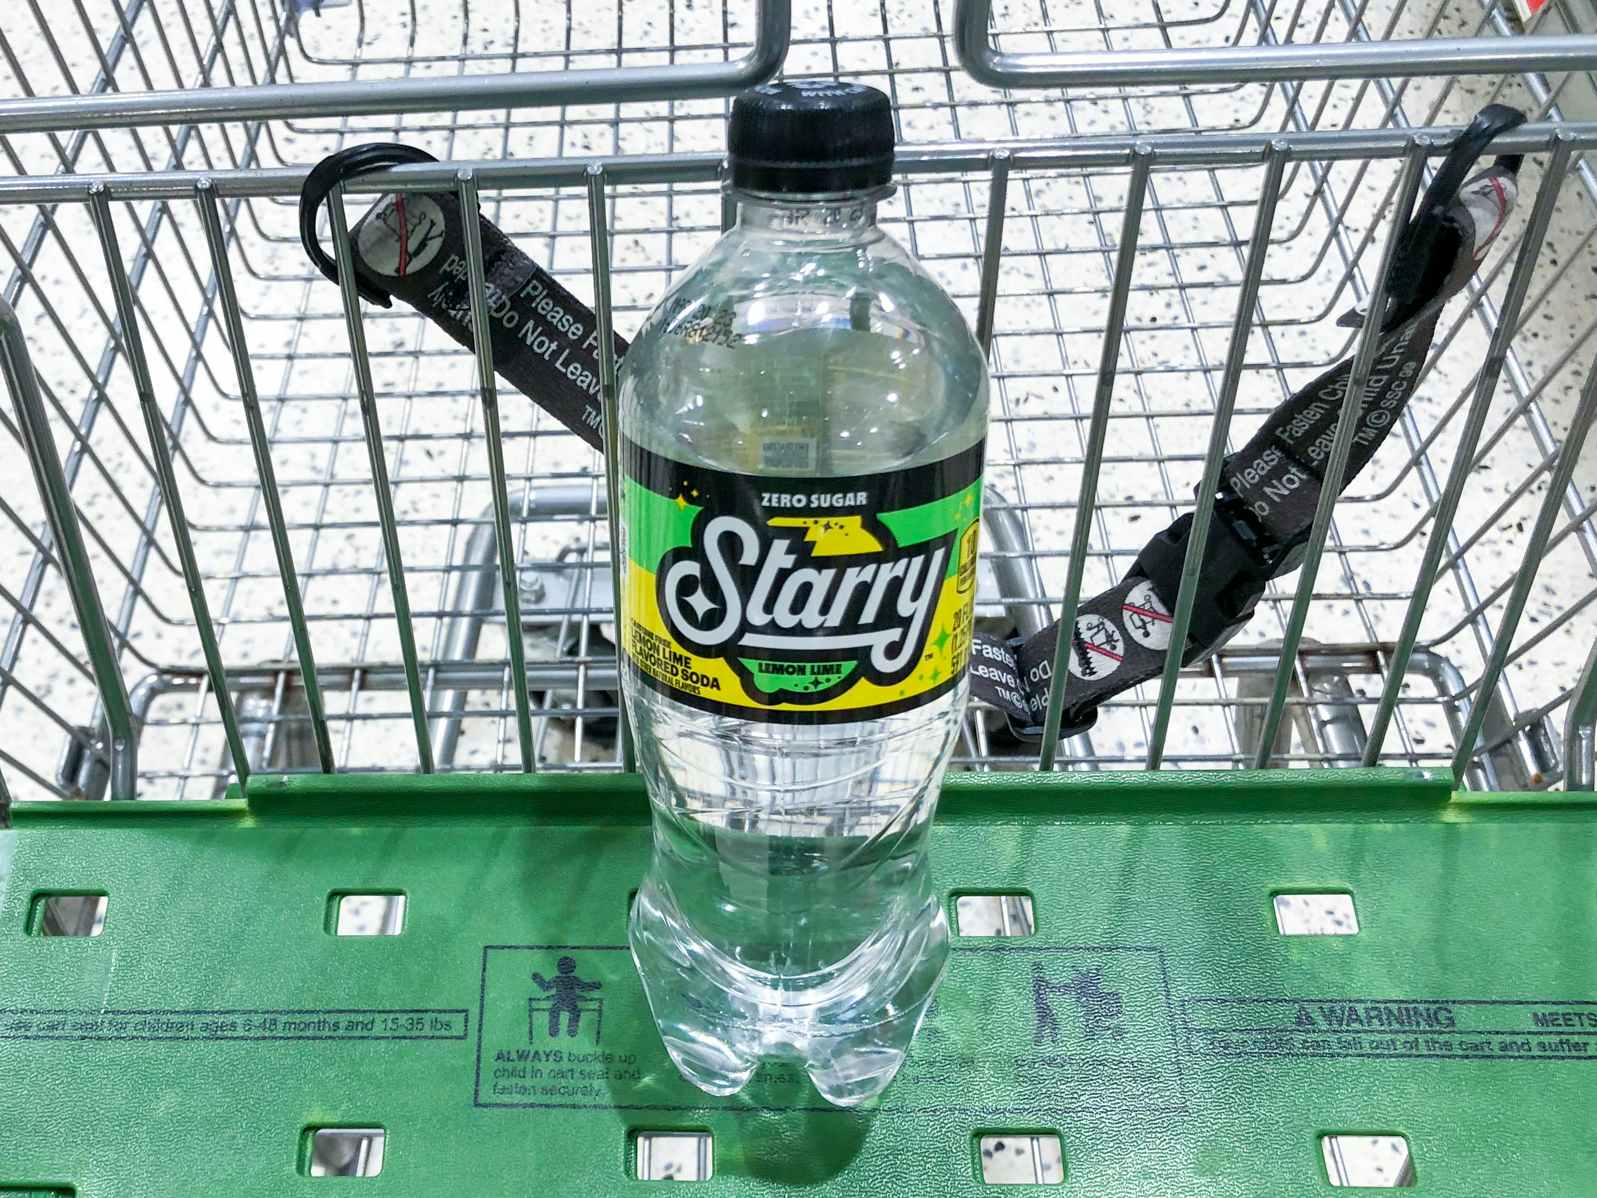 A bottle of Starry lemon lime soda in a grocery cart